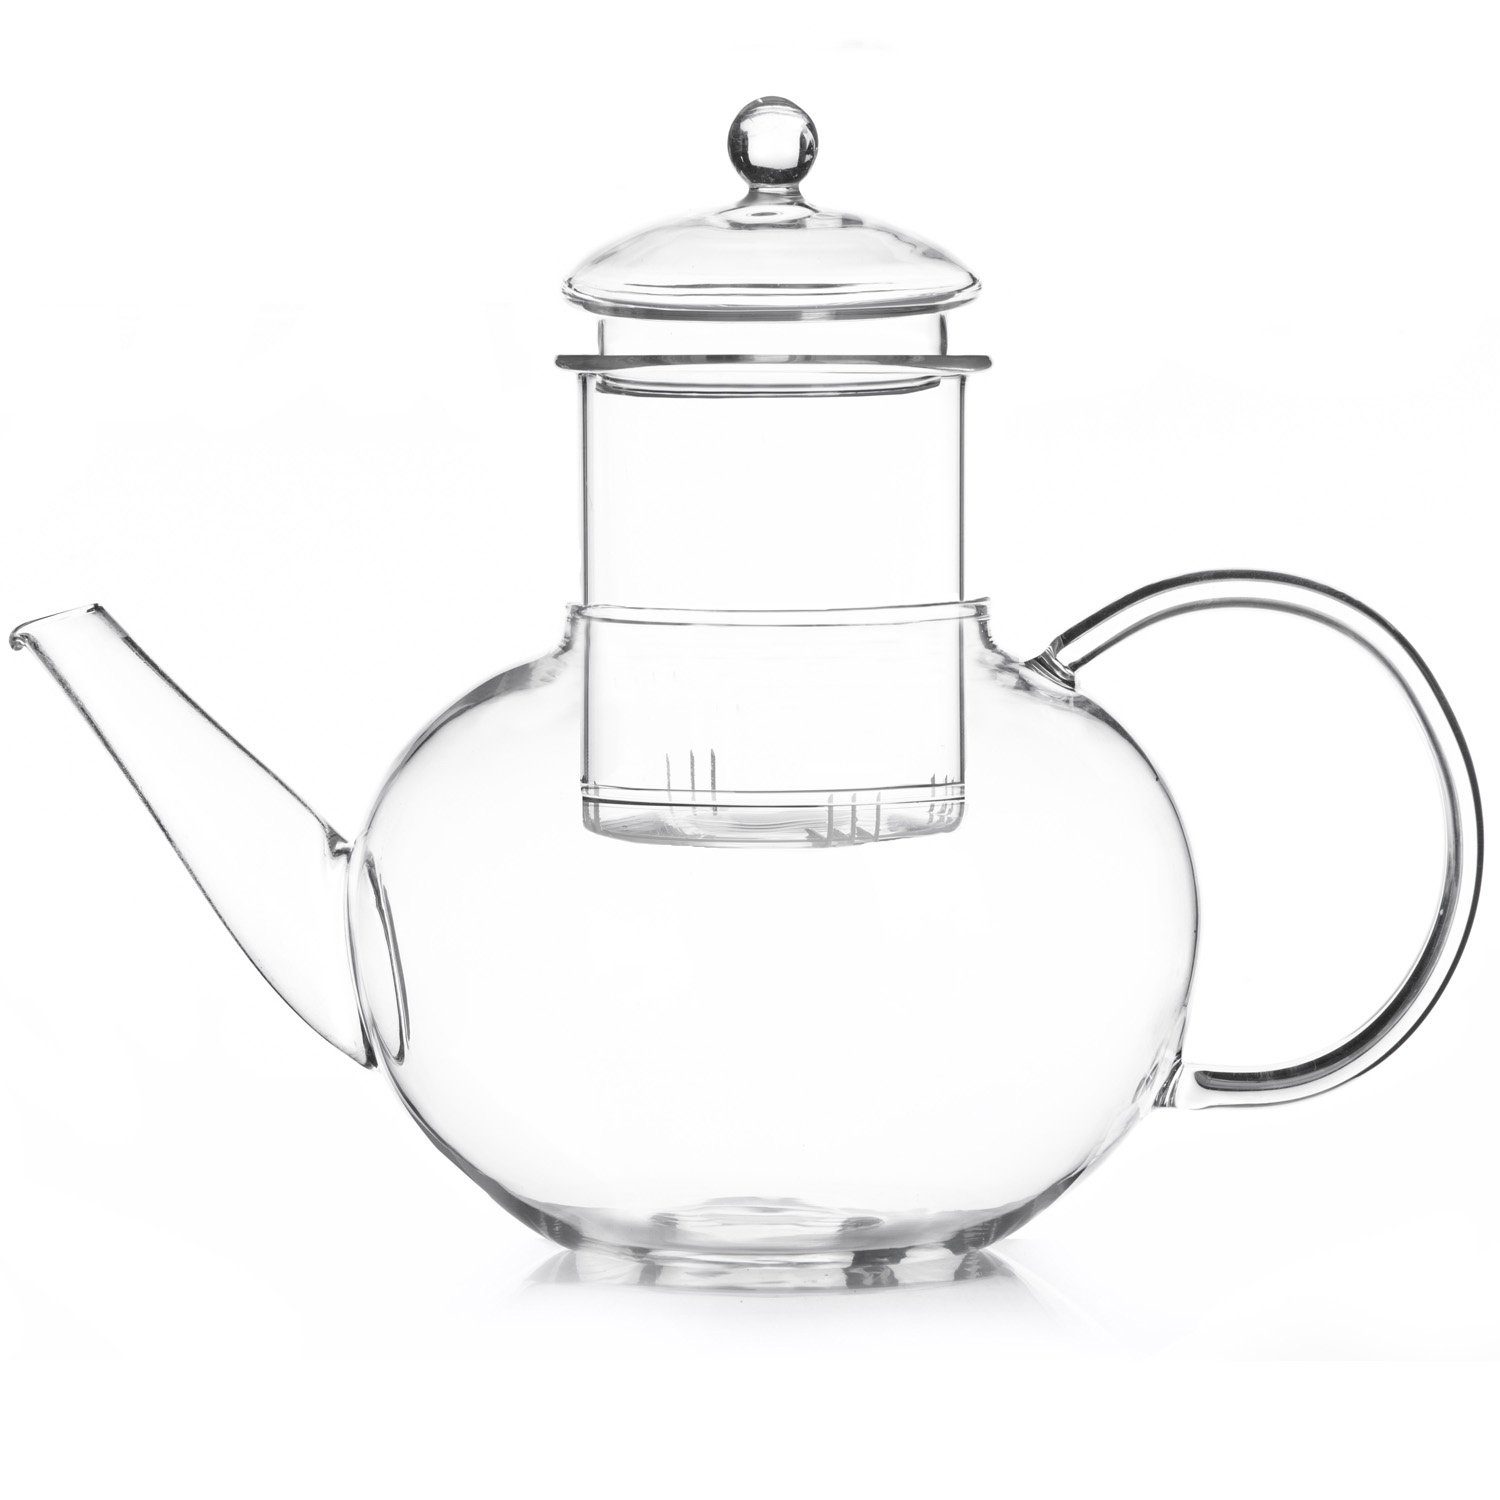 Teesieb, Teekanne Glas-Kanne l, Teefilter Dimono & mit Mundgeblasene 1.5 mit Filtereinsatz Teekanne